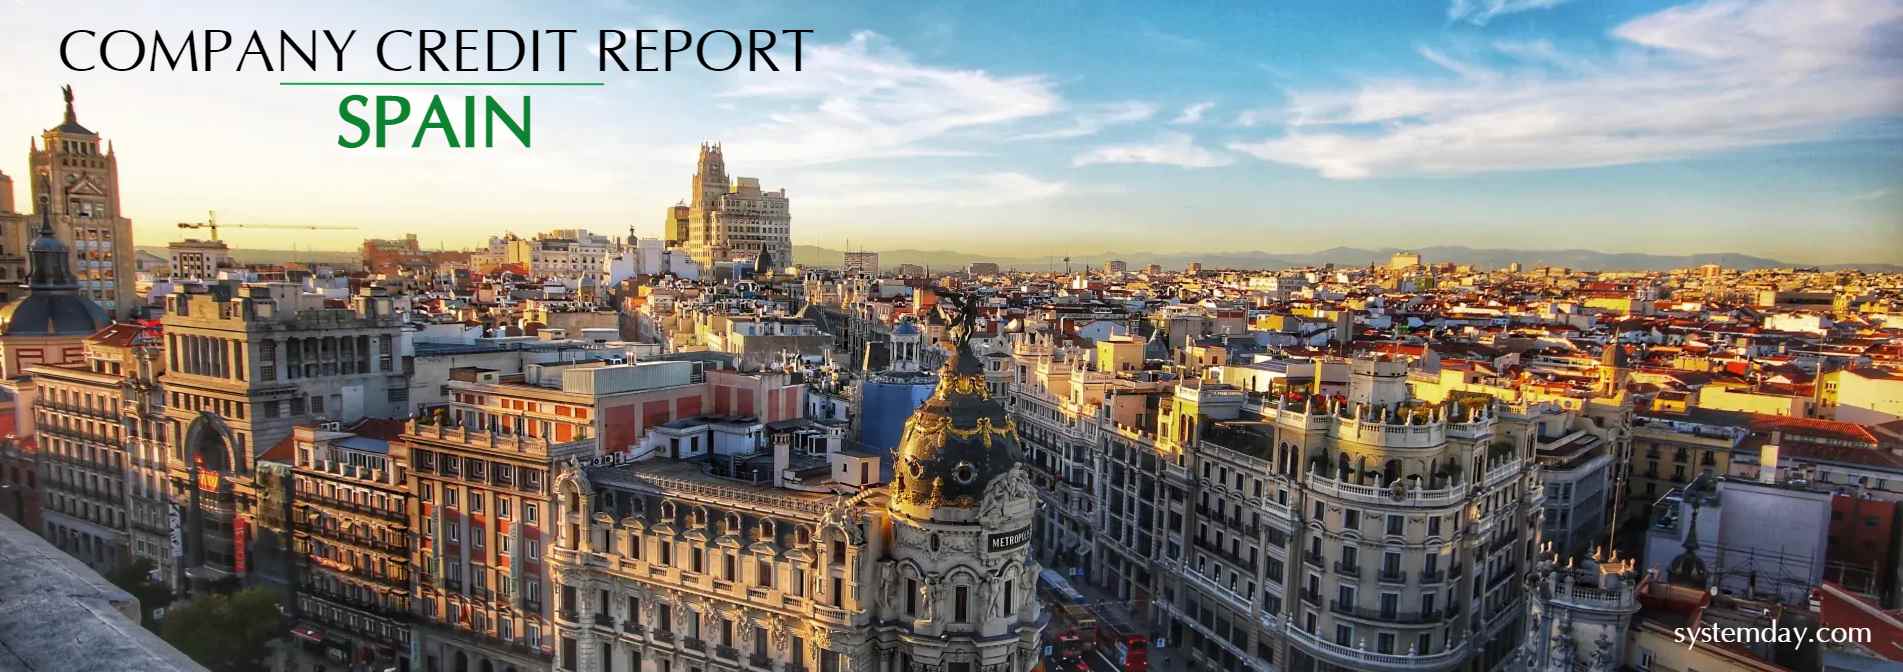 Spain Company Credit Report